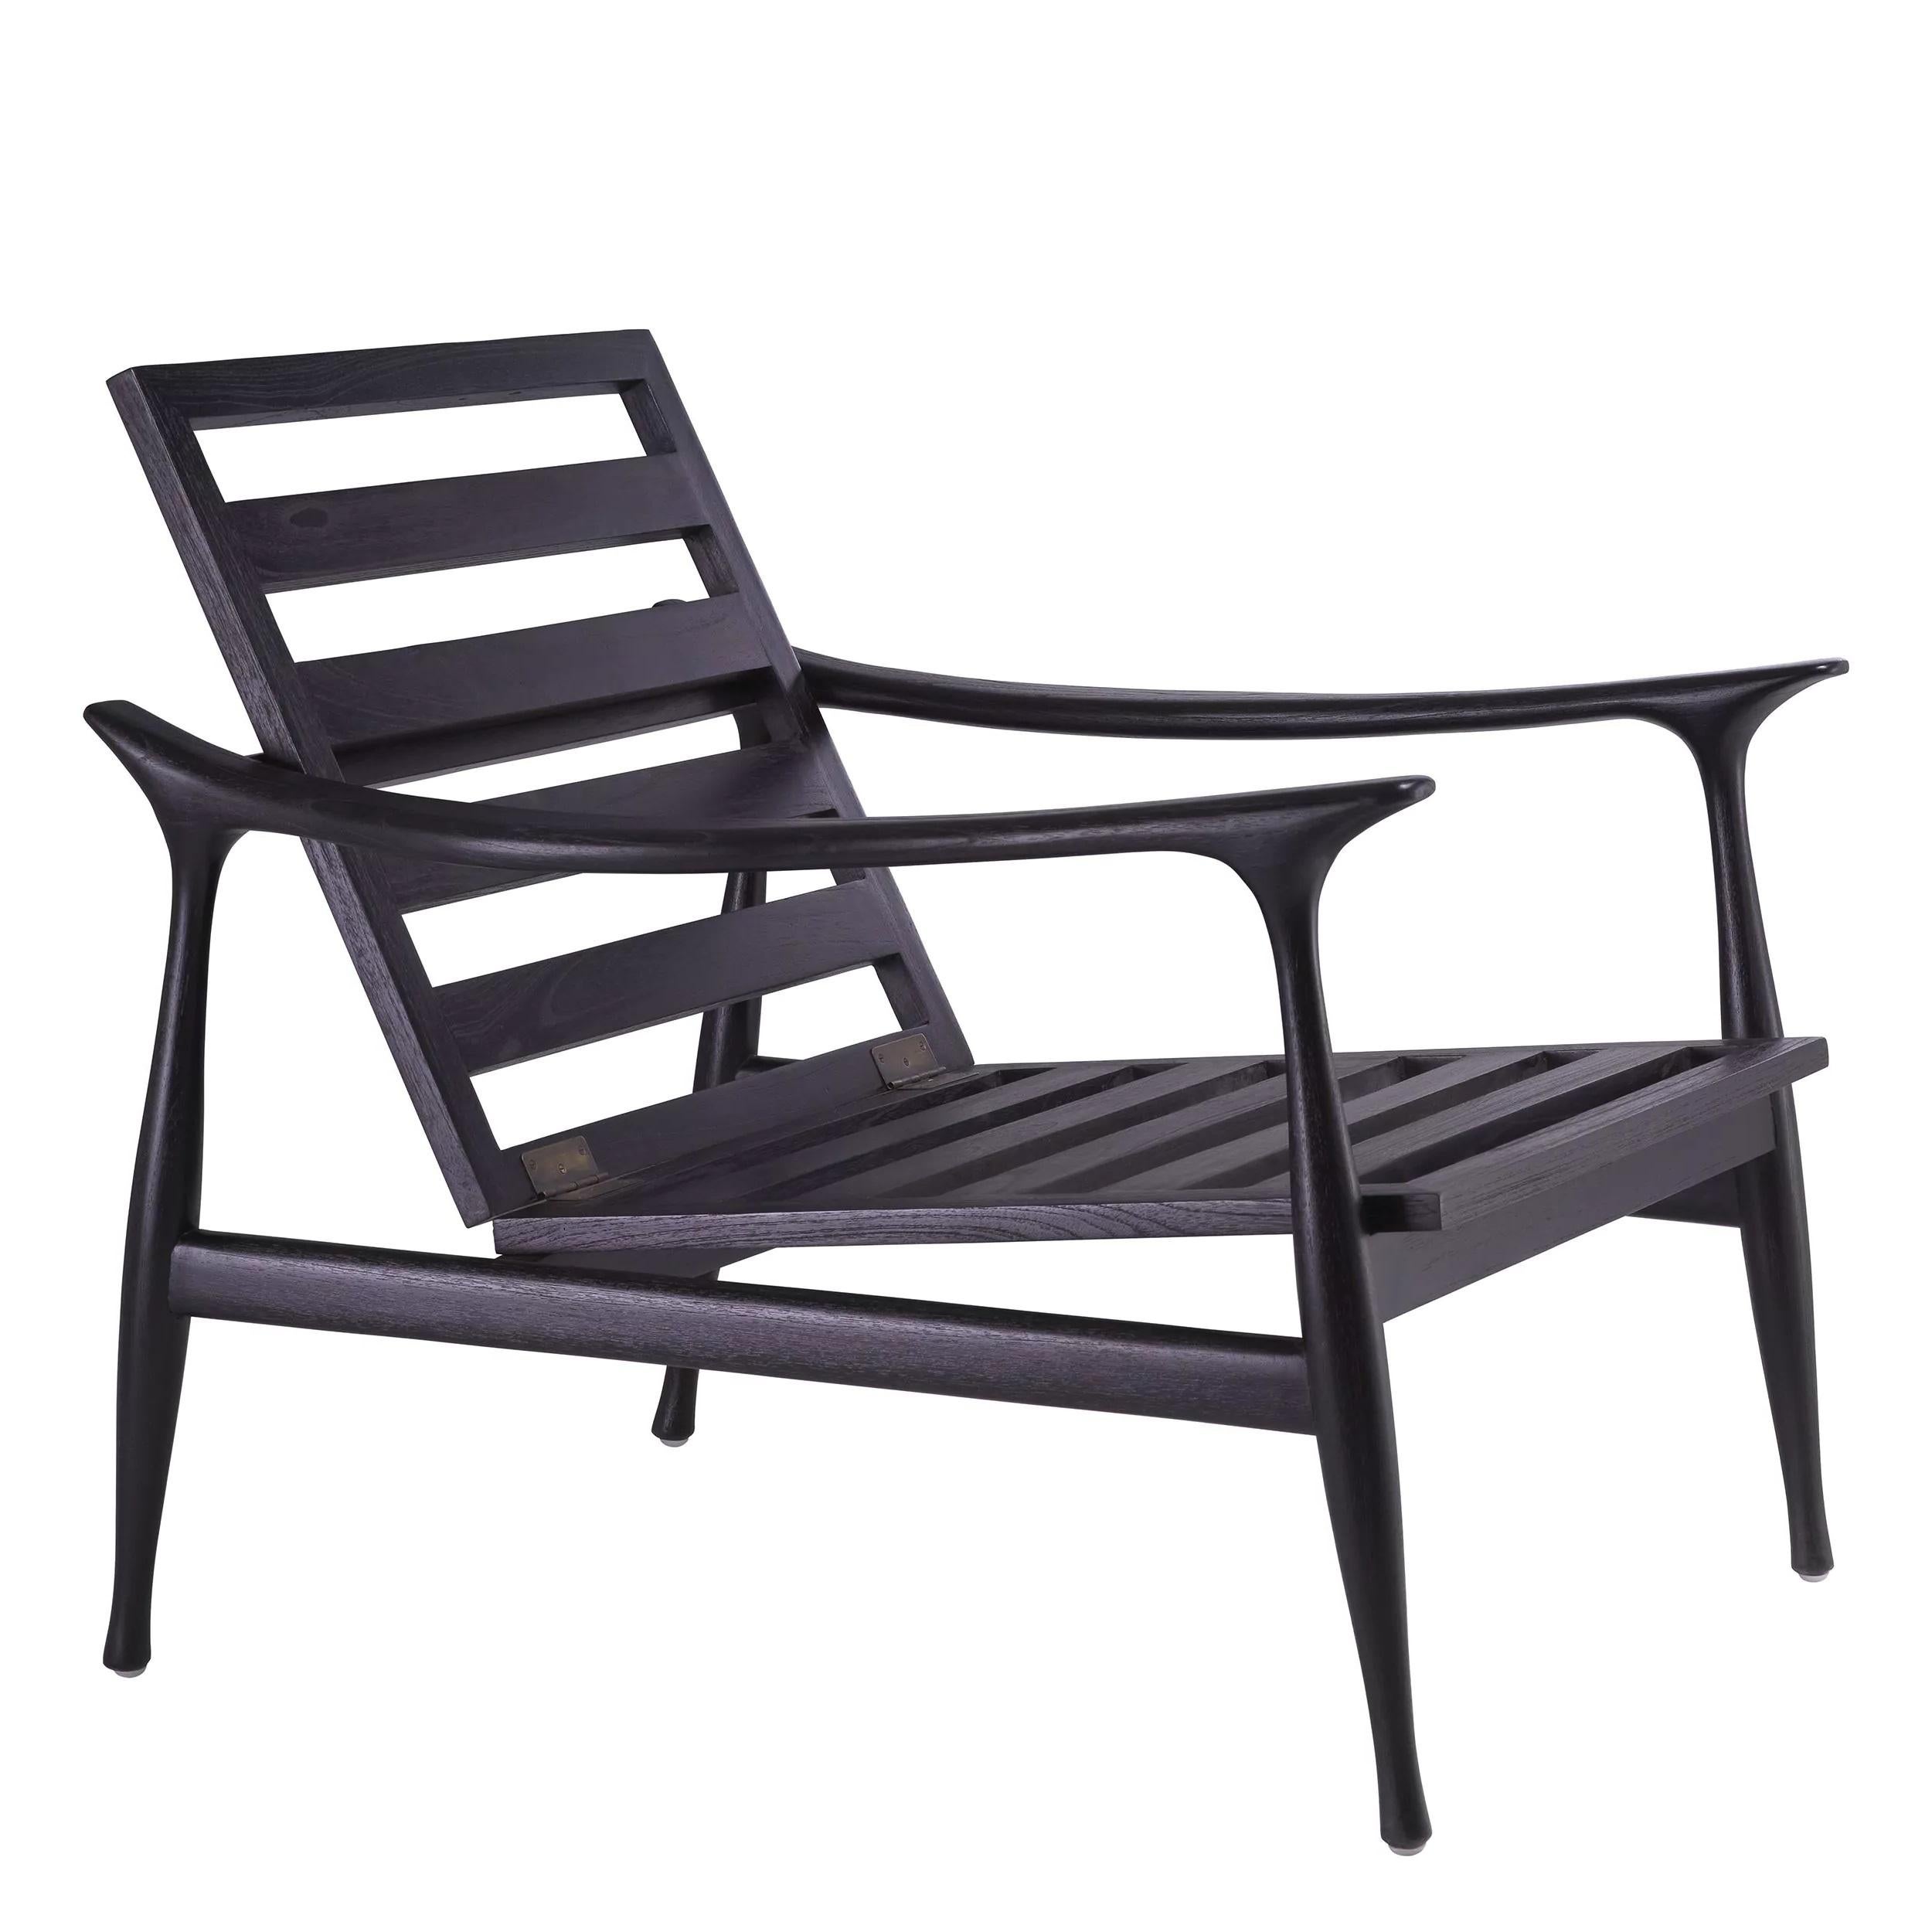 1950s Danish design and Scandinavian style black wooden and grey bouclé fabric armchair.